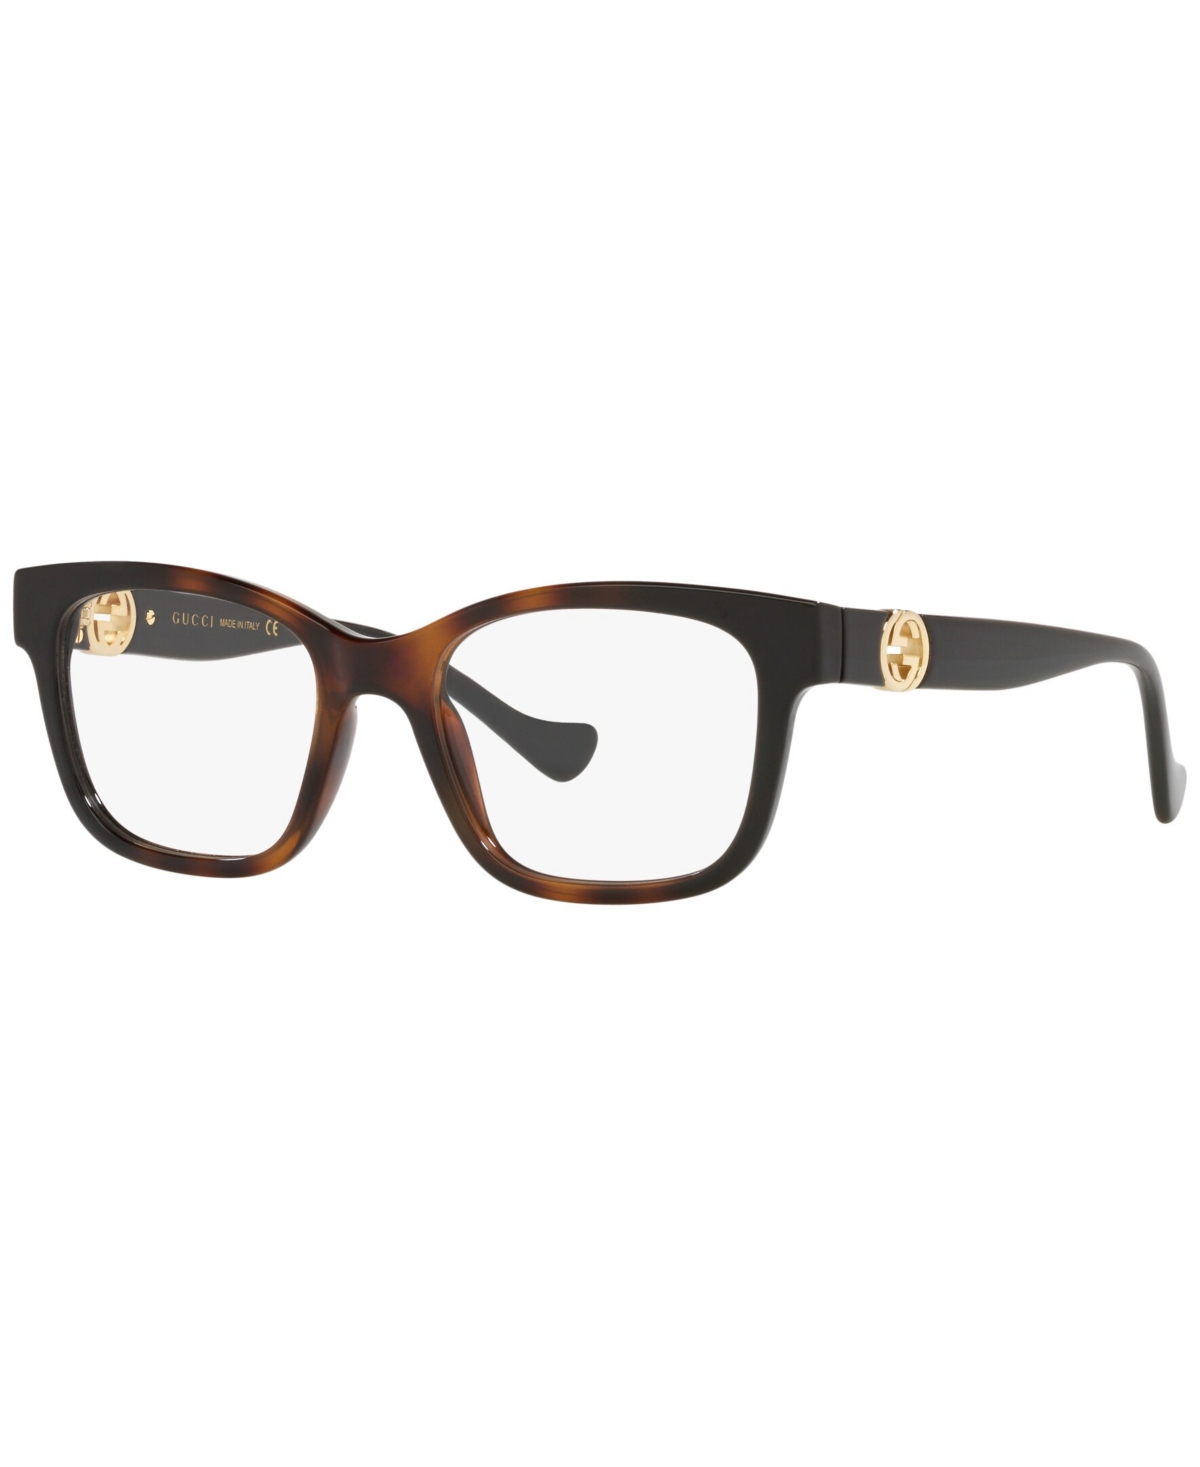 Women's Rectangle Eyeglasses, GC00163251-x - Brown